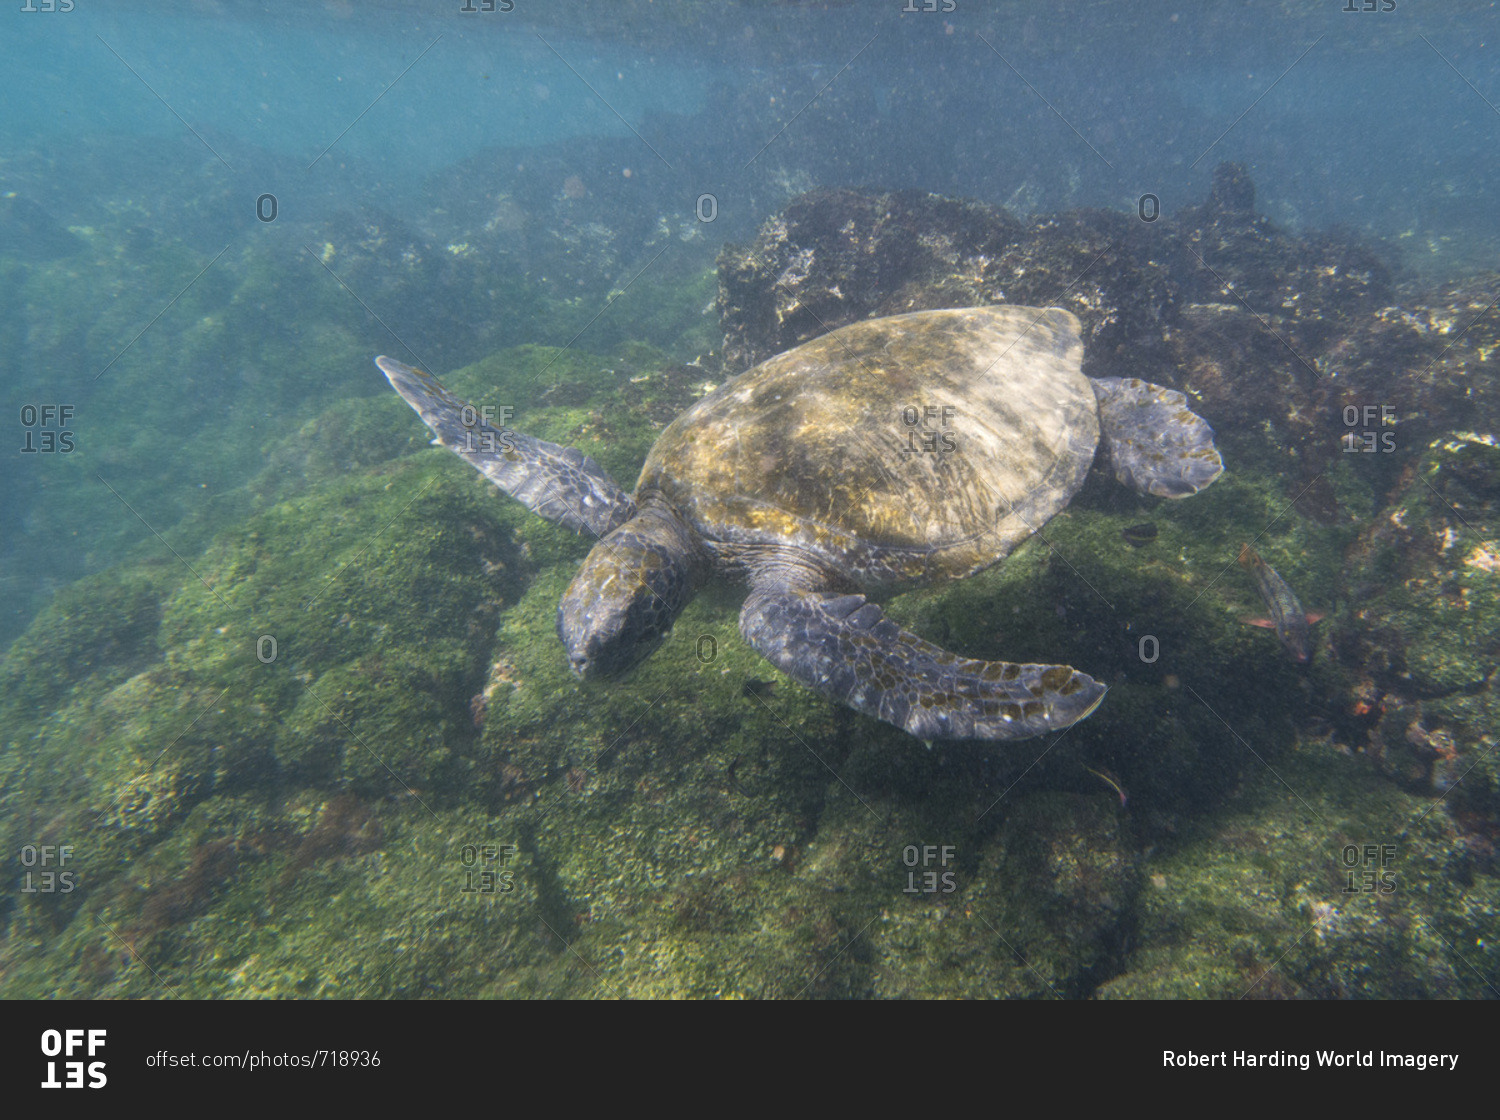 Pacific green sea turtle (Chelonia mydas agassizi), Post Office Bay, Floreana Island, Galapagos Islands, Ecuador, South America